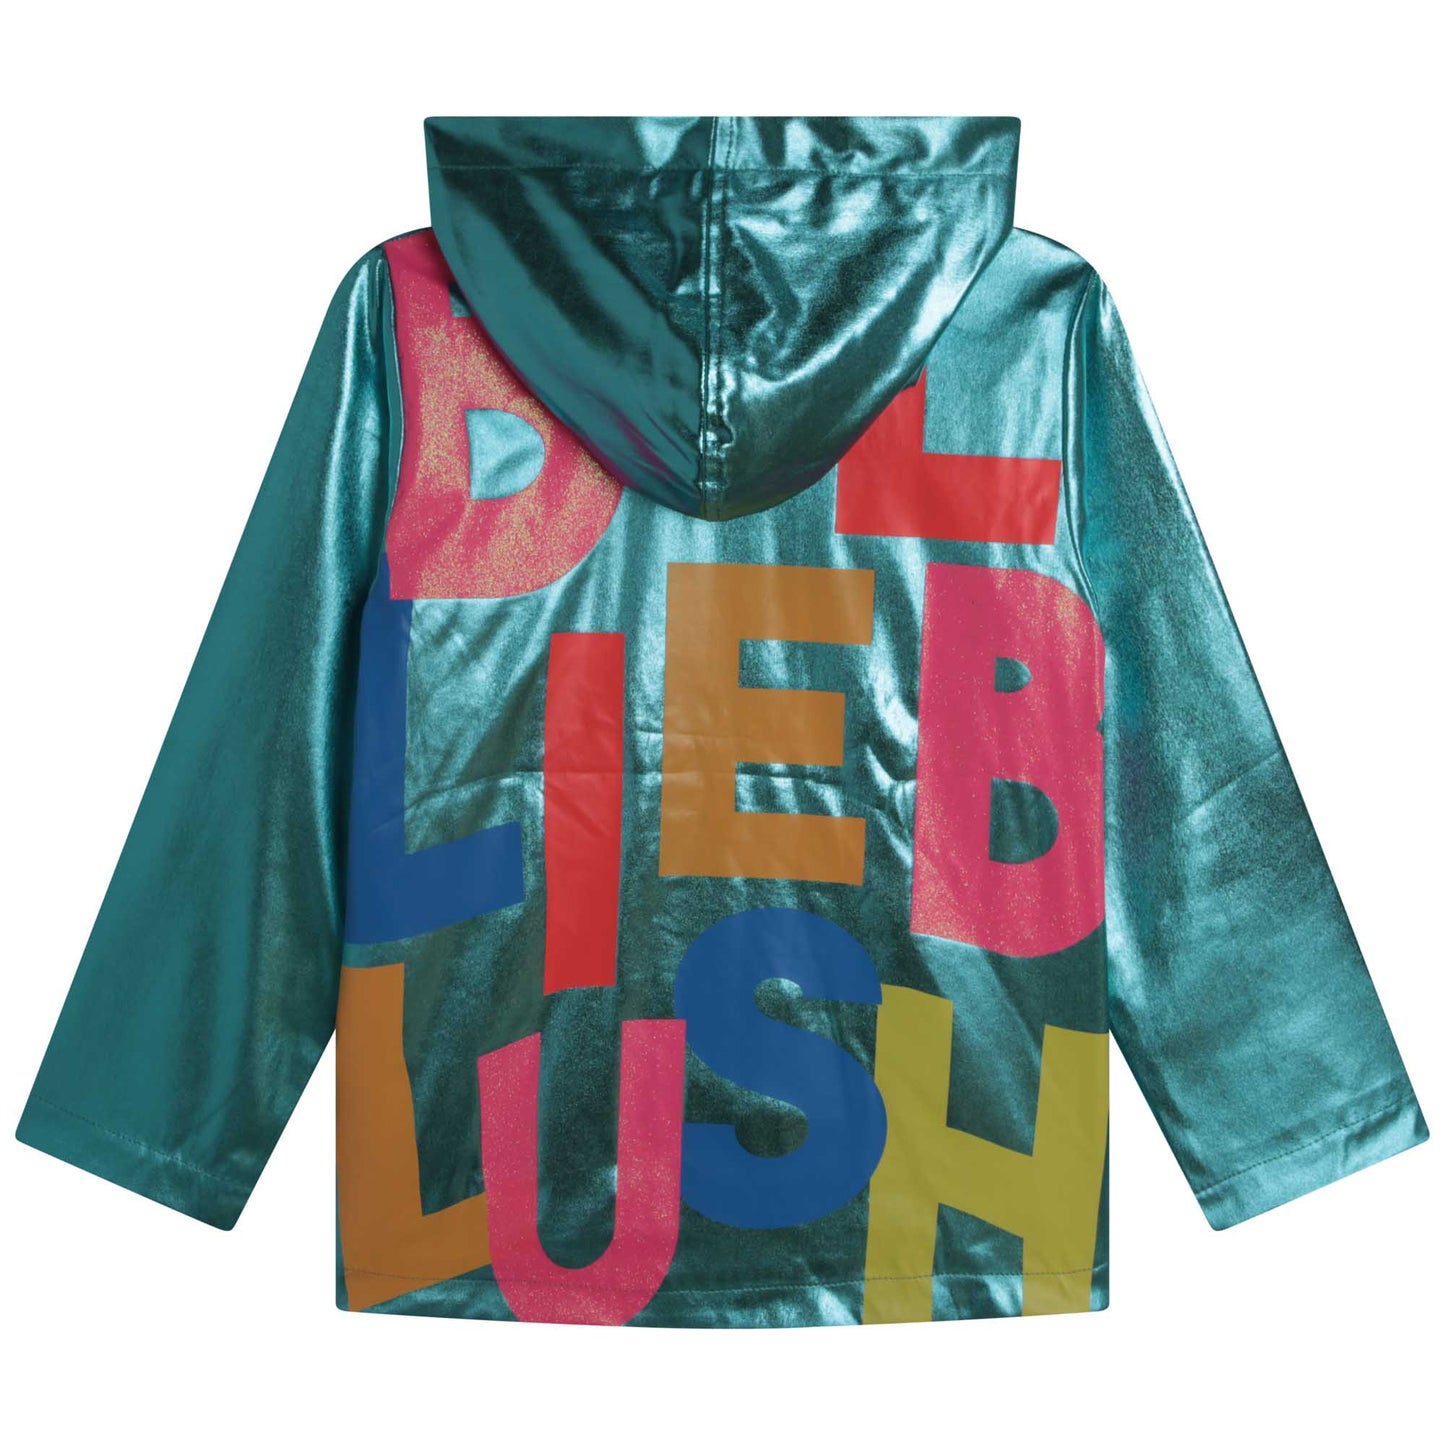 Billie Blush Girl's Sea Green Hooded Raincoat